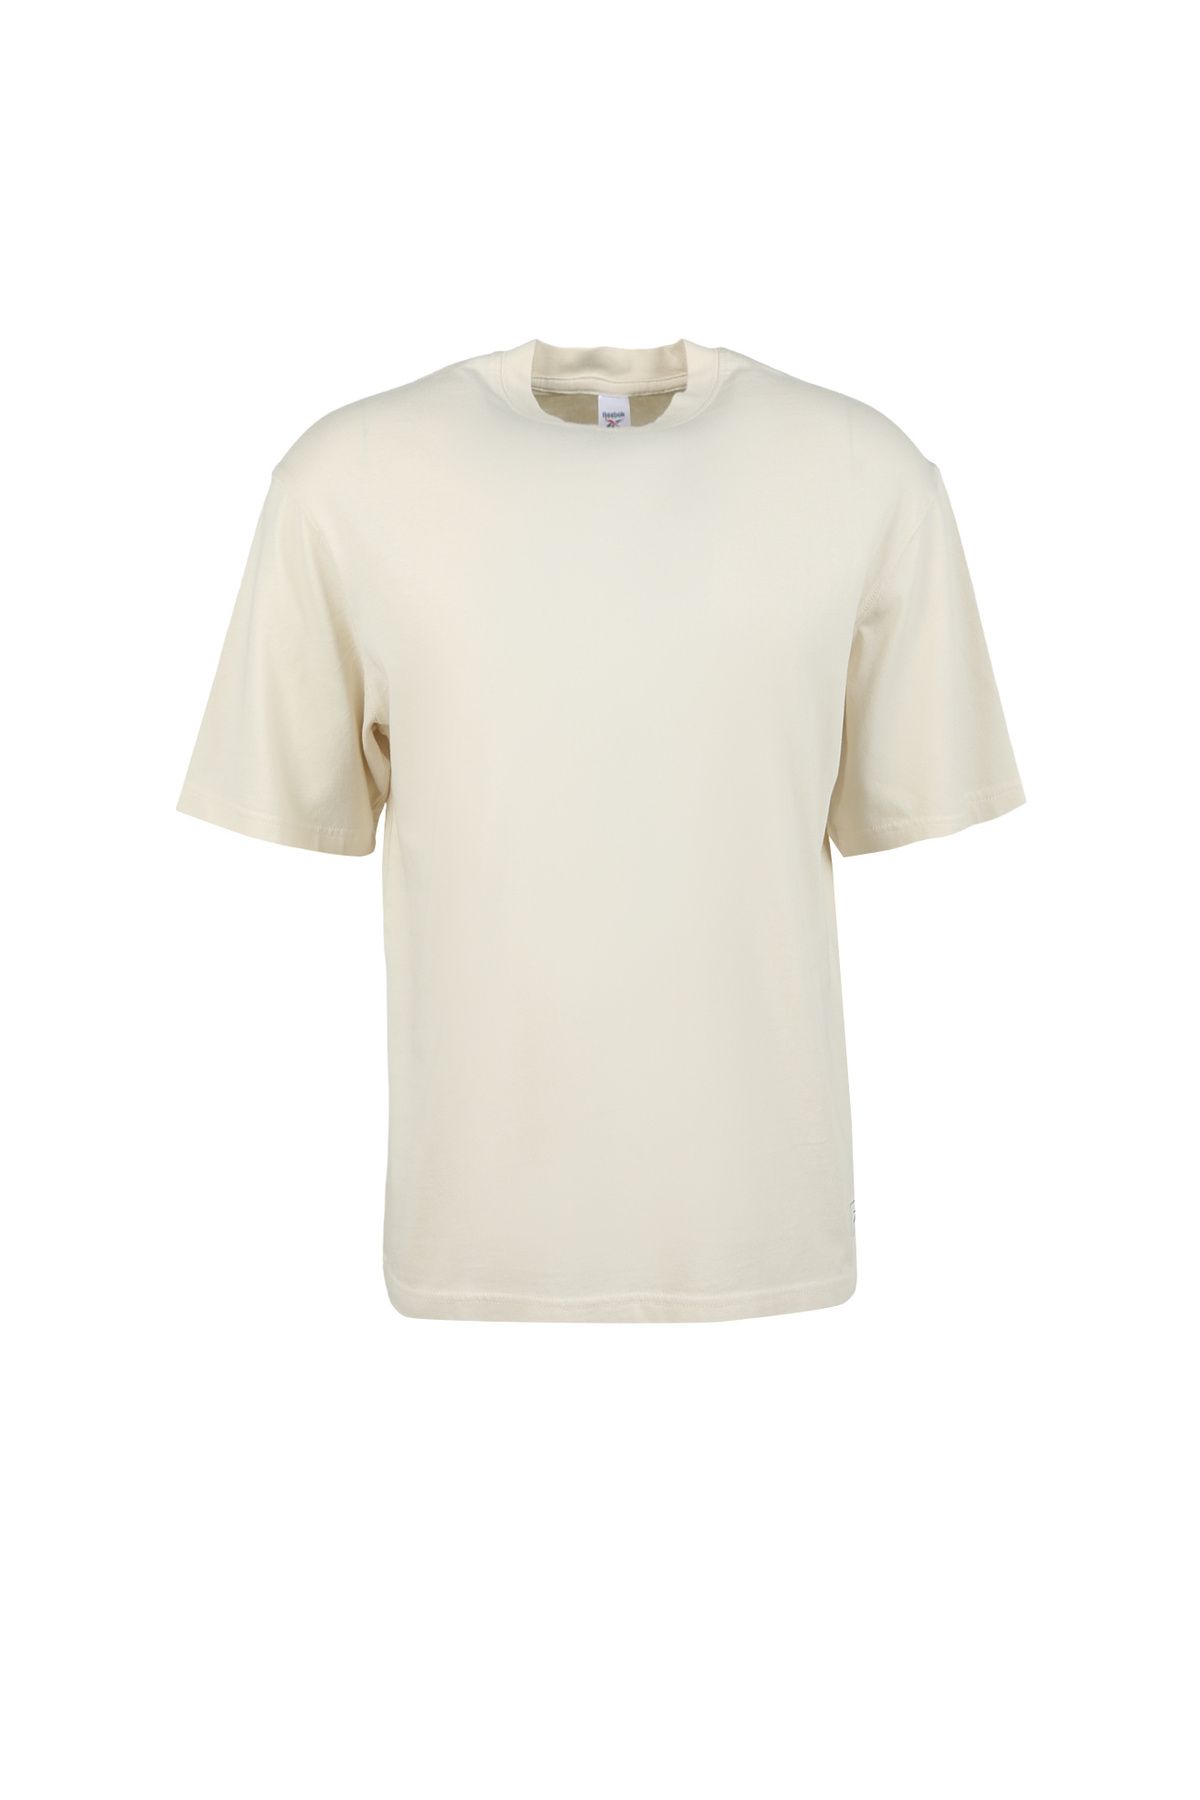 Reebok Yuvarlak Yaka Düz Kırık Beyaz Kadın T-Shirt HS9150 CL ND TEE